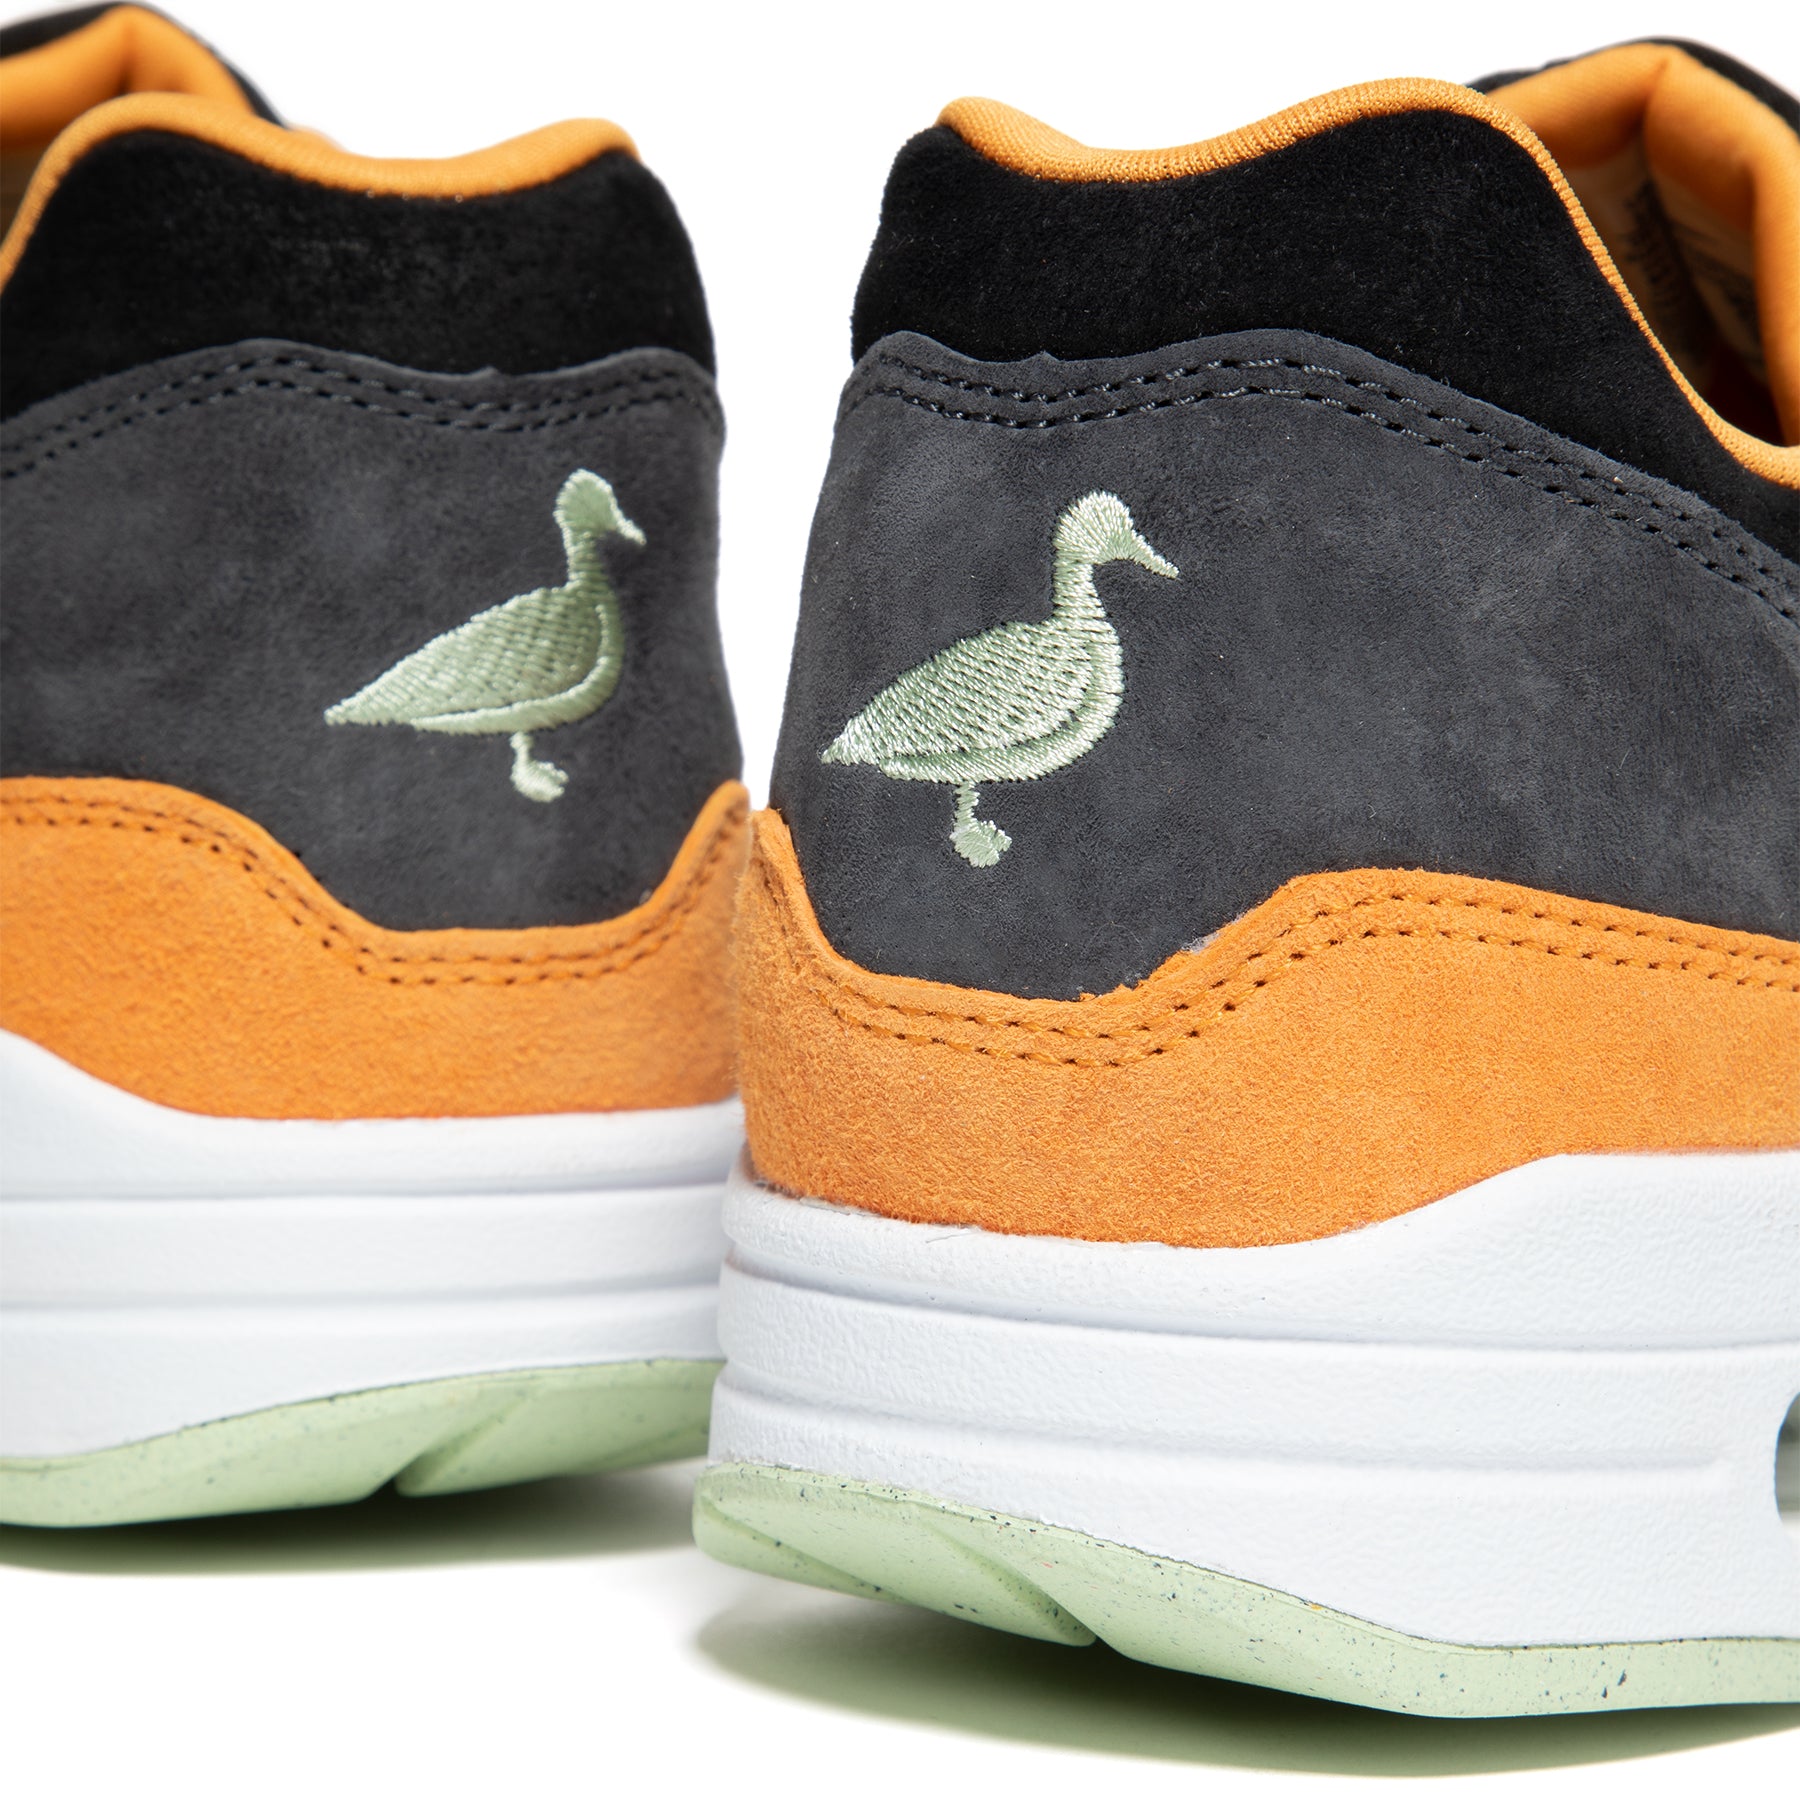 Chaussures et baskets homme Nike Air Max 1 Premium Anthracite/  Honeydew-Black-Kumquat